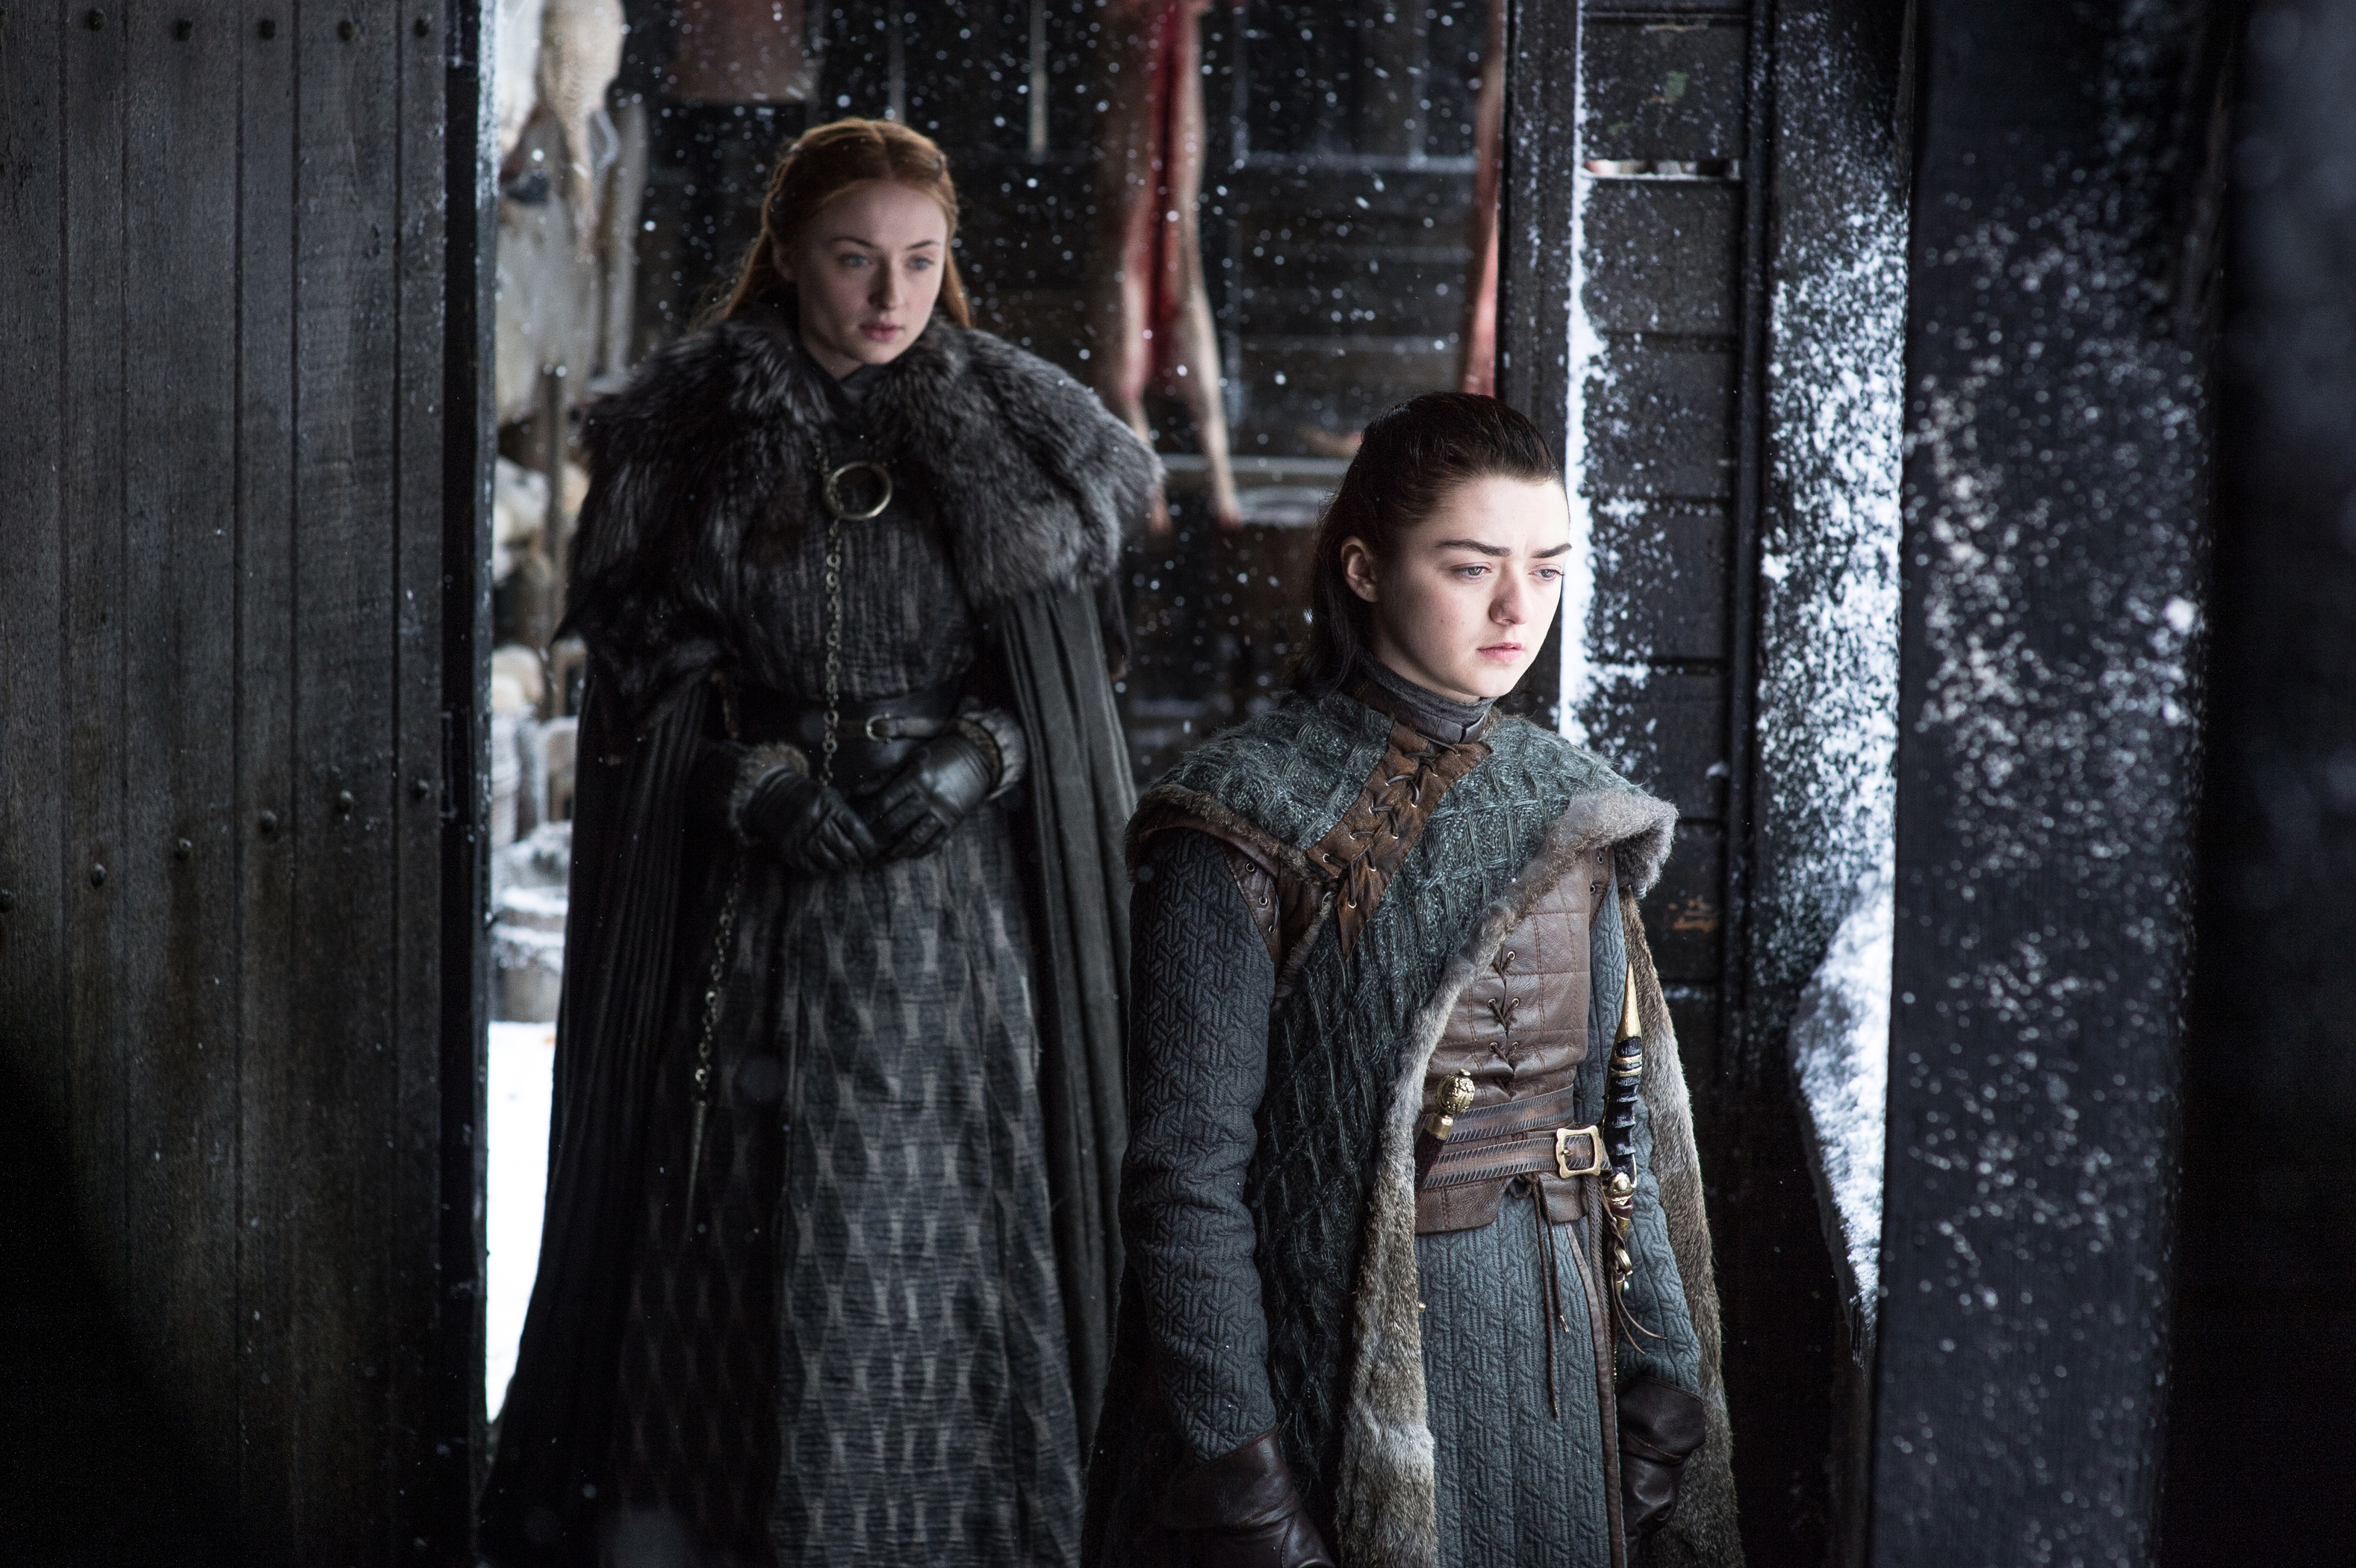 Sansa and Arya at Winterfell